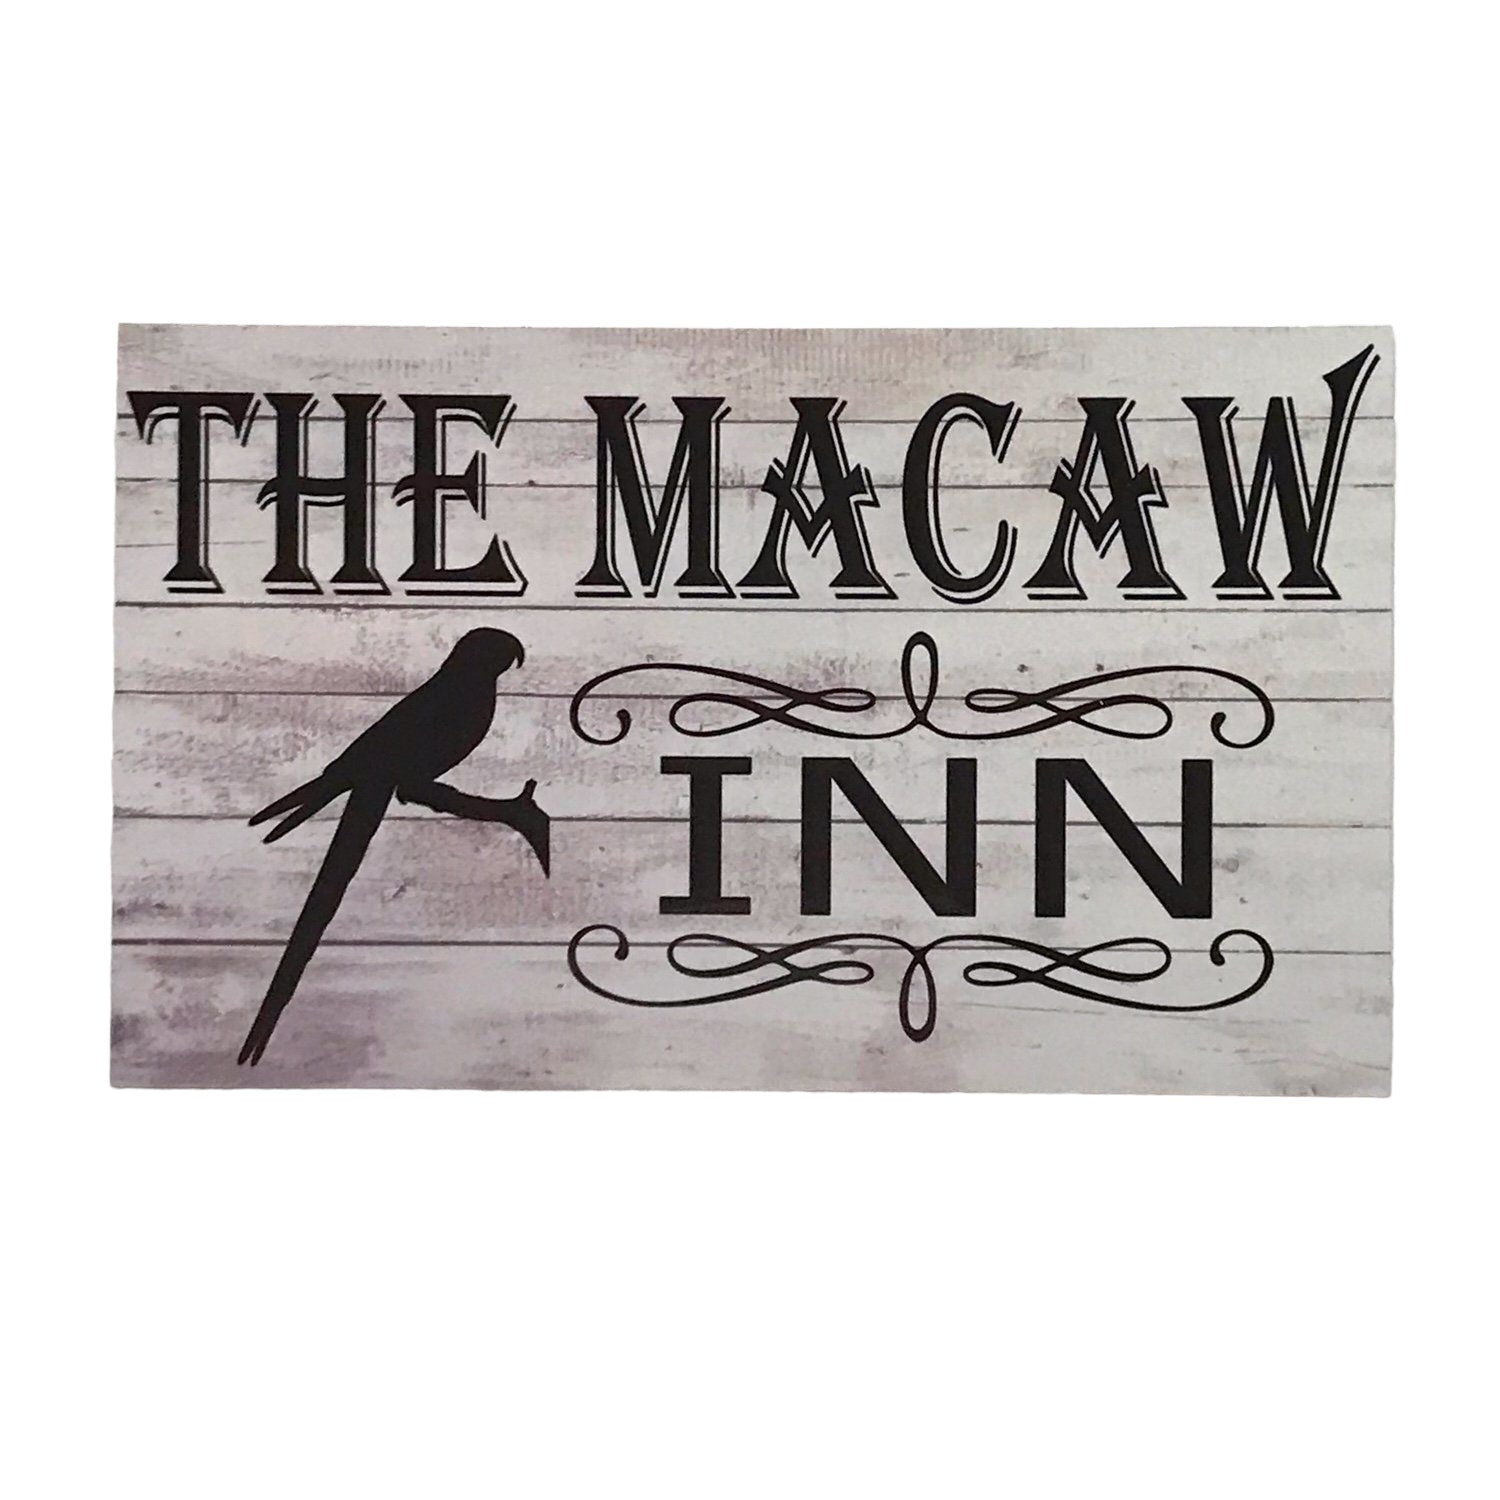 Macaw Inn Bird Pet Sign - The Renmy Store Homewares & Gifts 